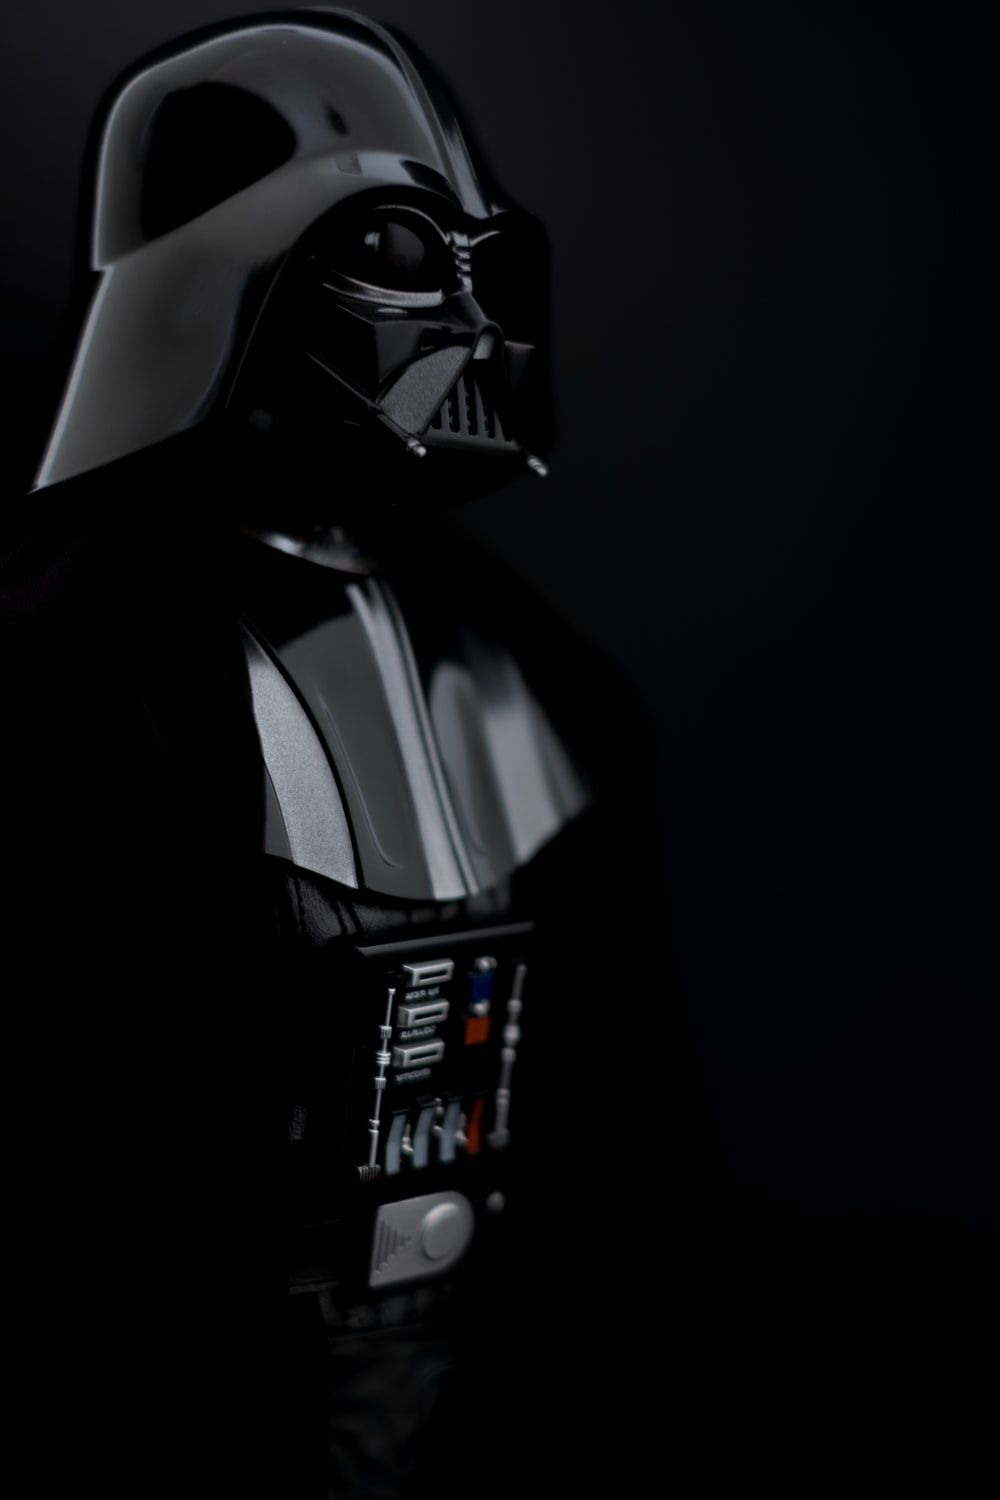 Star Wars Darth Vader wallpaper photo